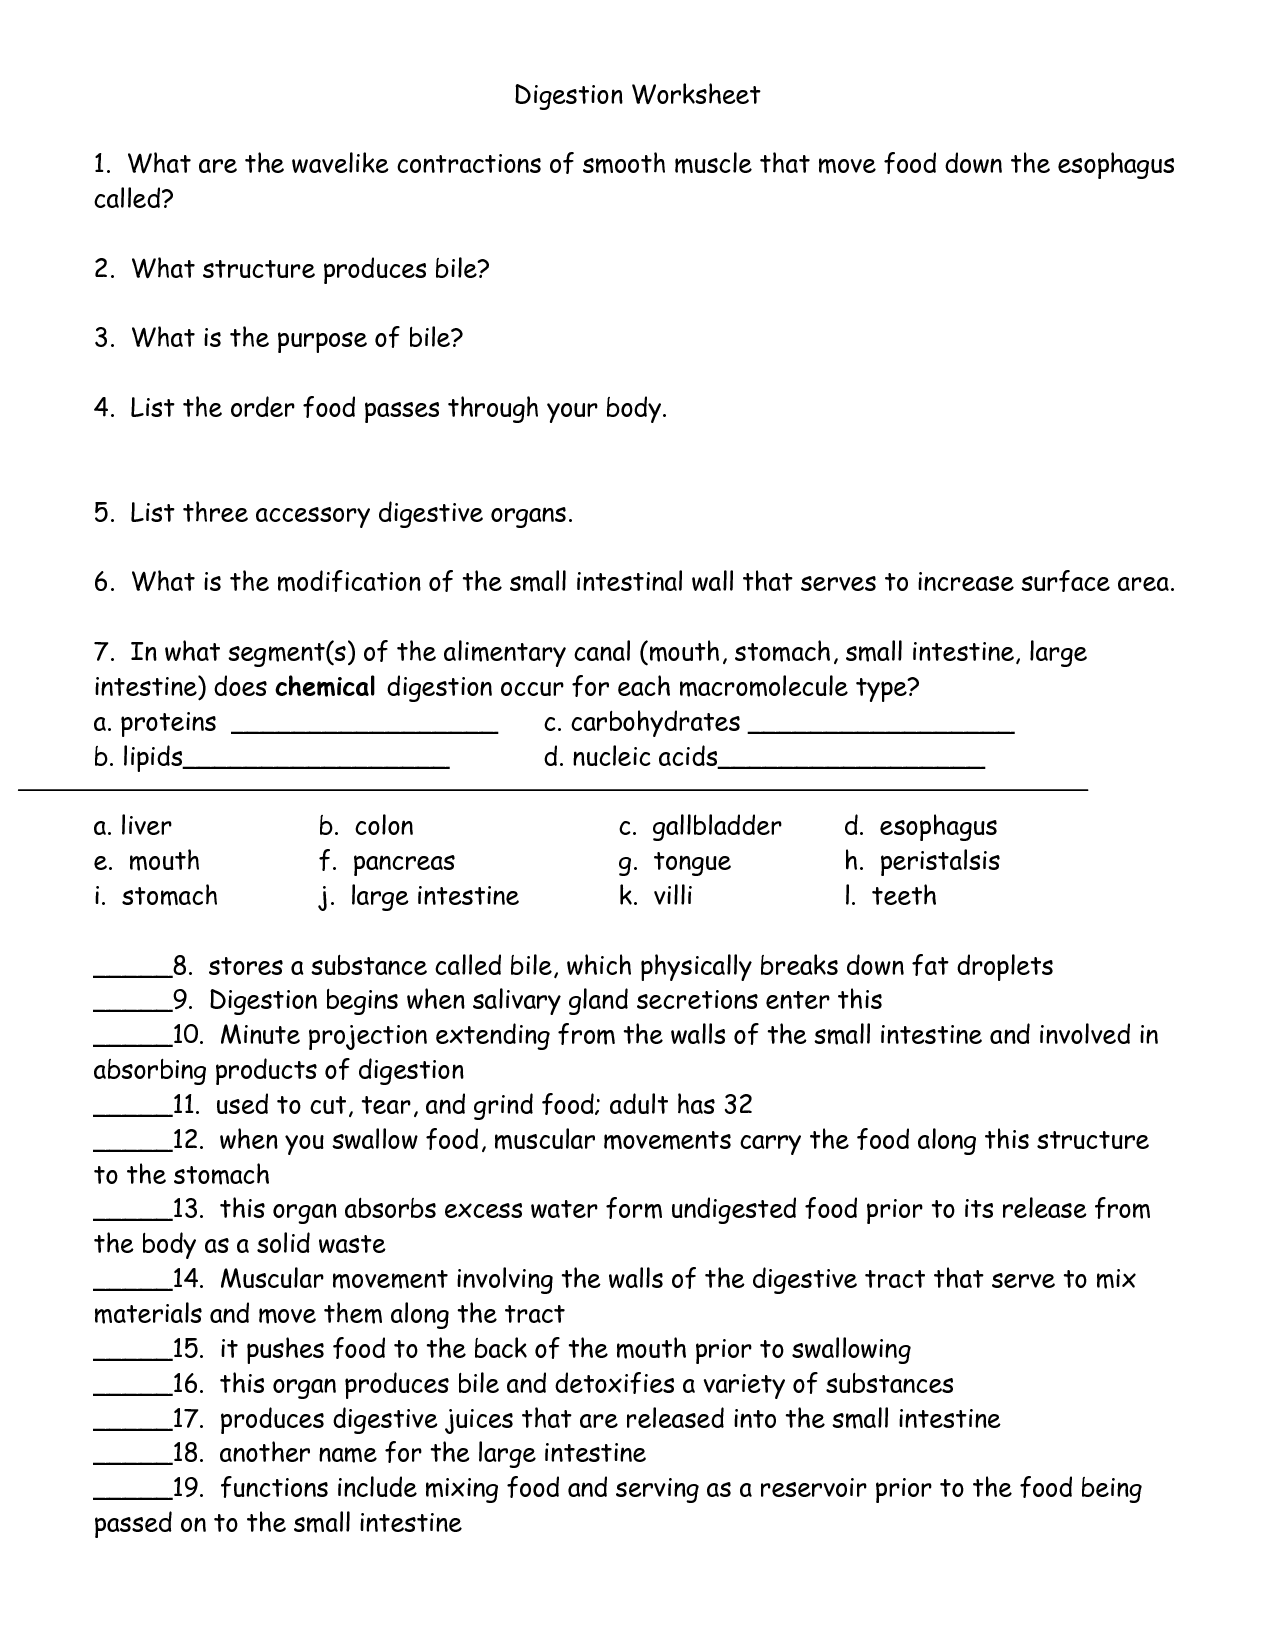 Digestion Worksheet Answer Key Image